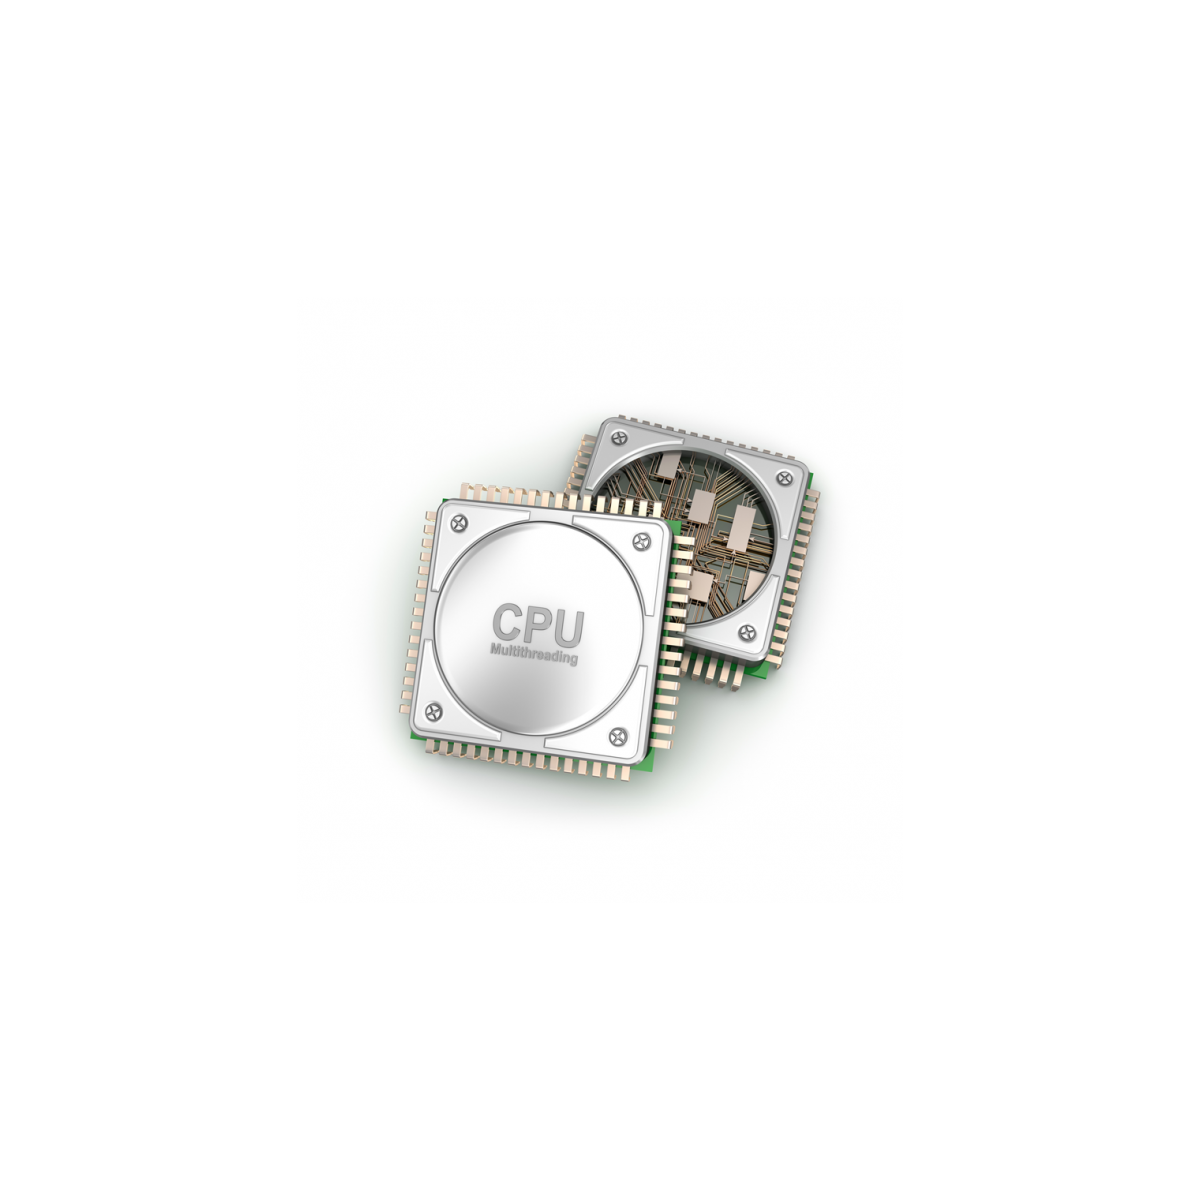 AMD CPU EPYC 7002 Series 16C/32T Model 7302 (3/3.3GHz Max Boost,128MB, 155W, SP3) Tray